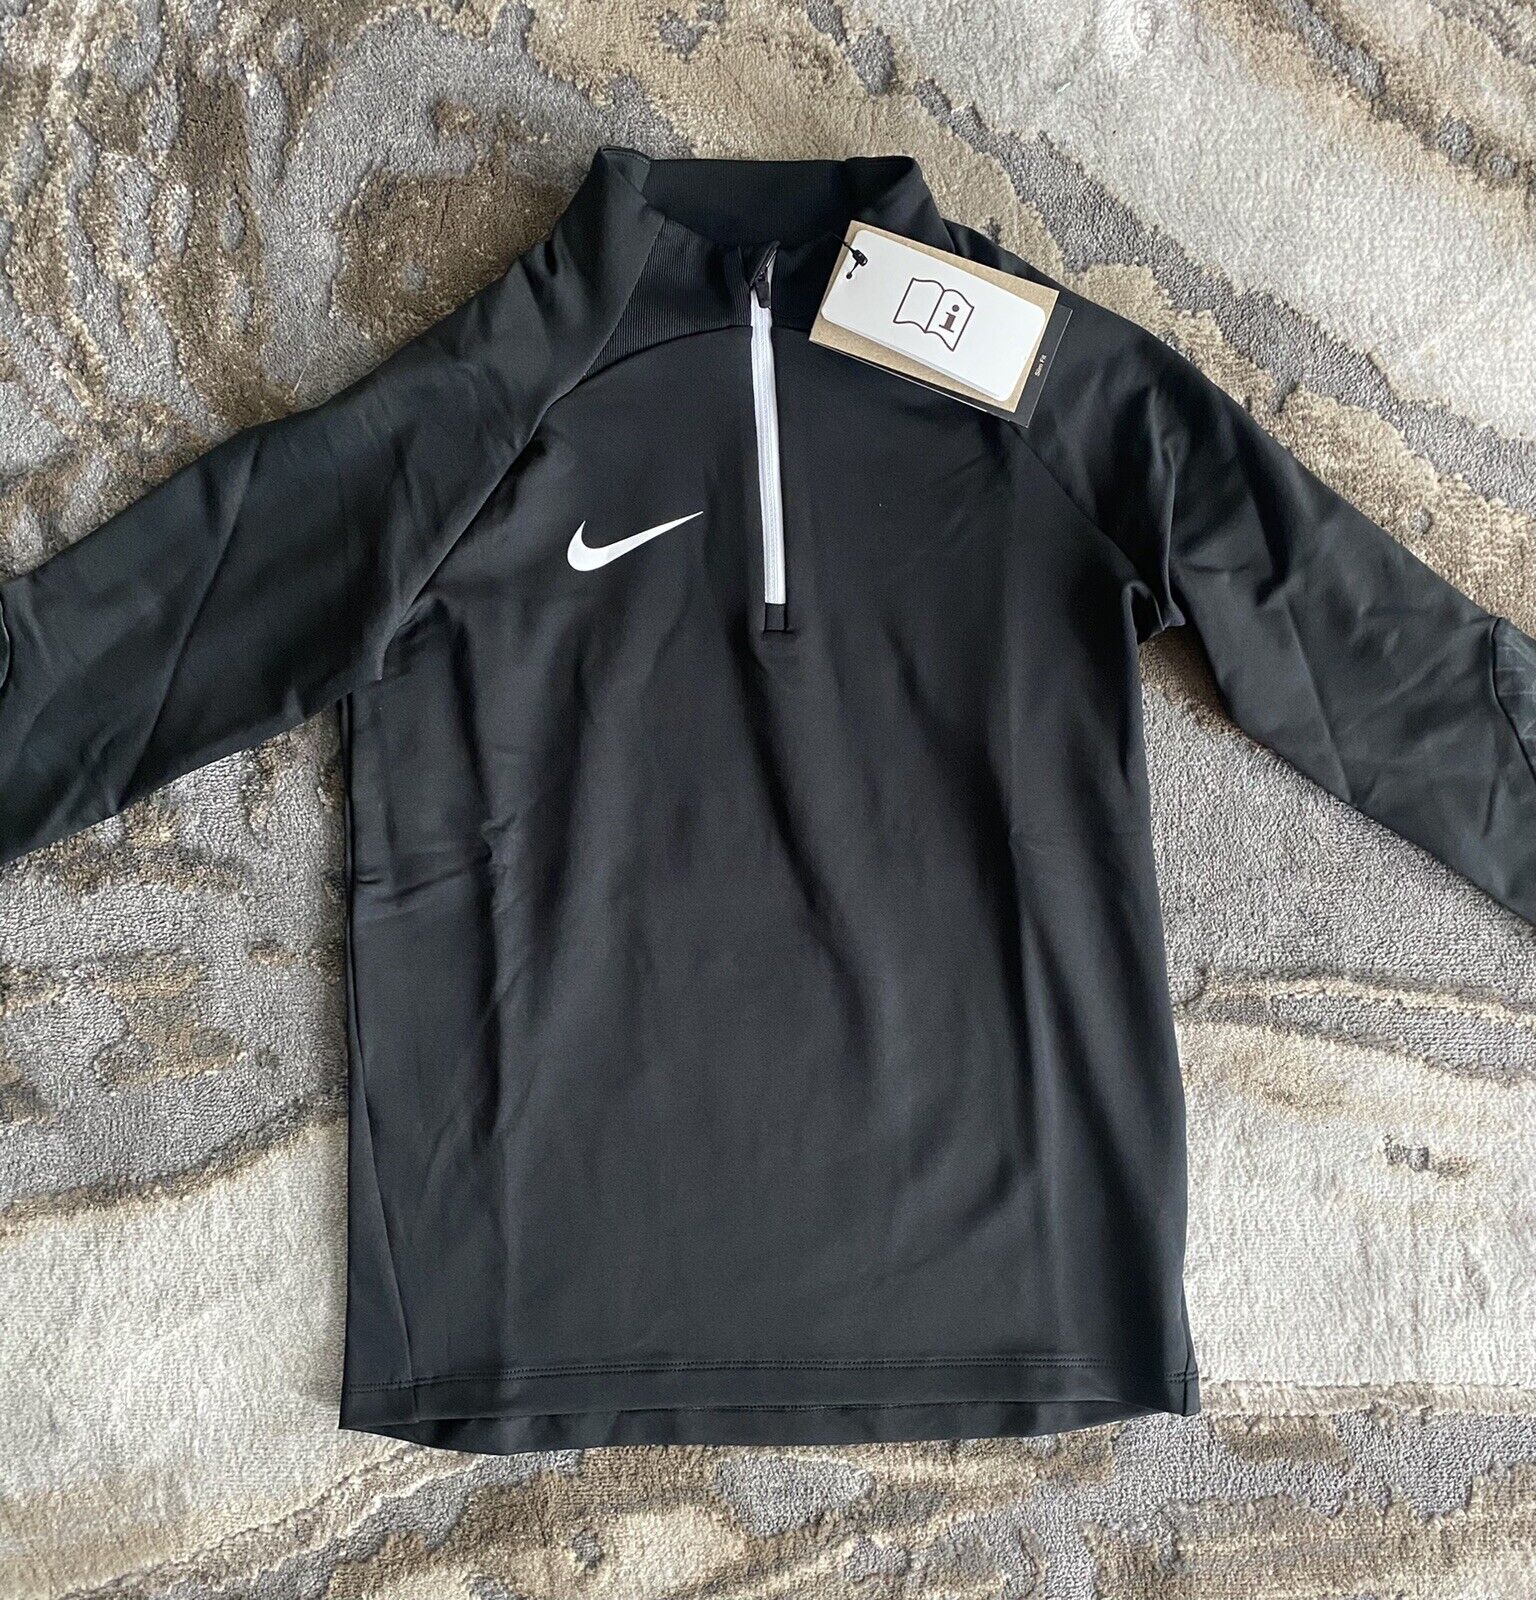 Nike Dri-fit Youth Unisex Activewear 1/4 Zip Pullover Size Medium